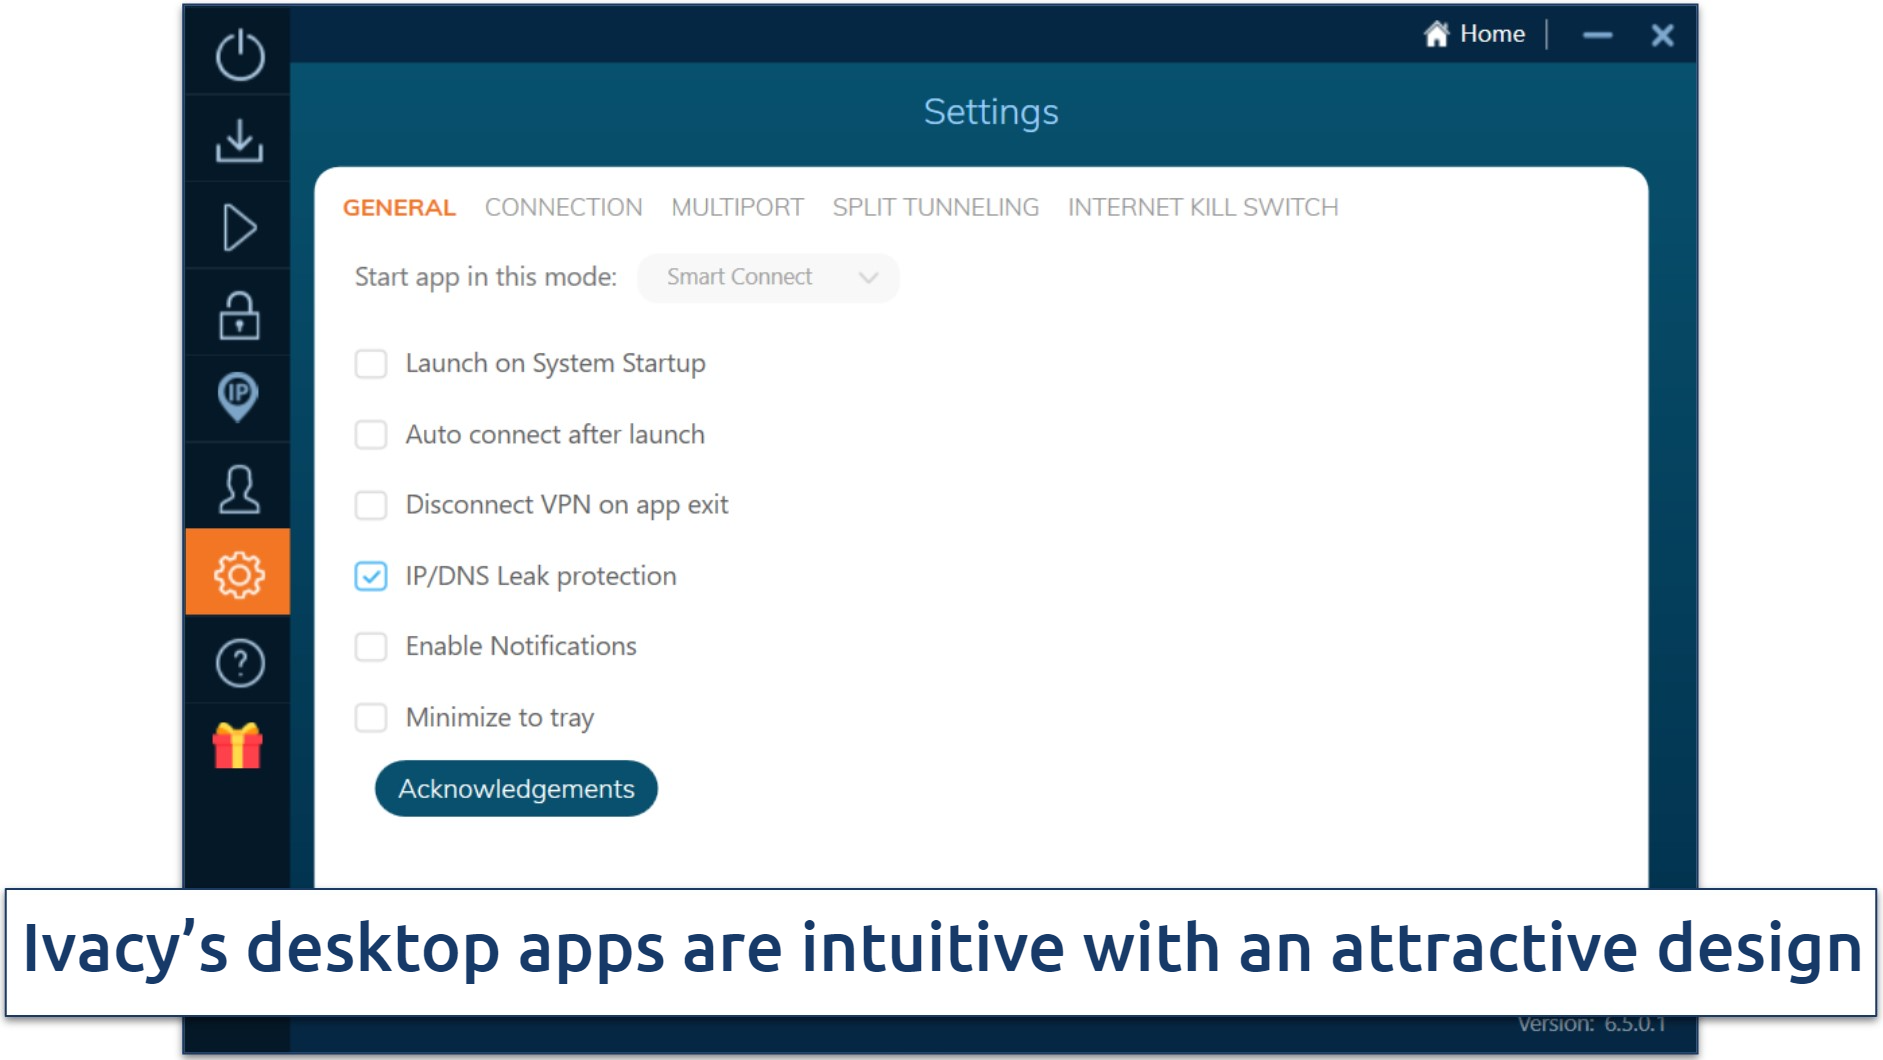 Screenshot of Ivacy's Windows UI highlighting the settings menu